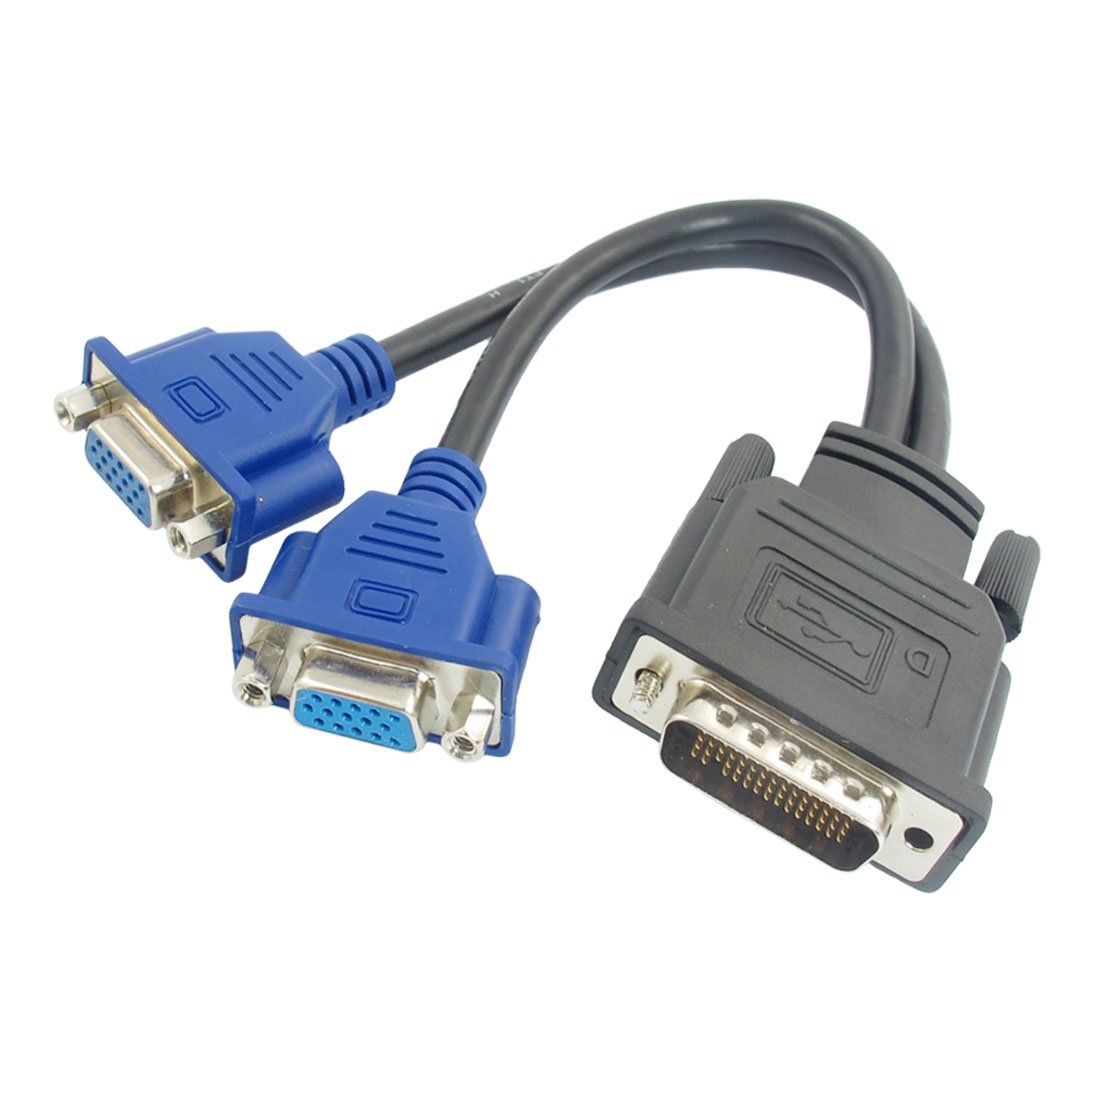 HF-D59V2GA: LFH-59 (DMS-59) DVI Male to Dual VGA Female M/F Splitter Dual View video Adapter